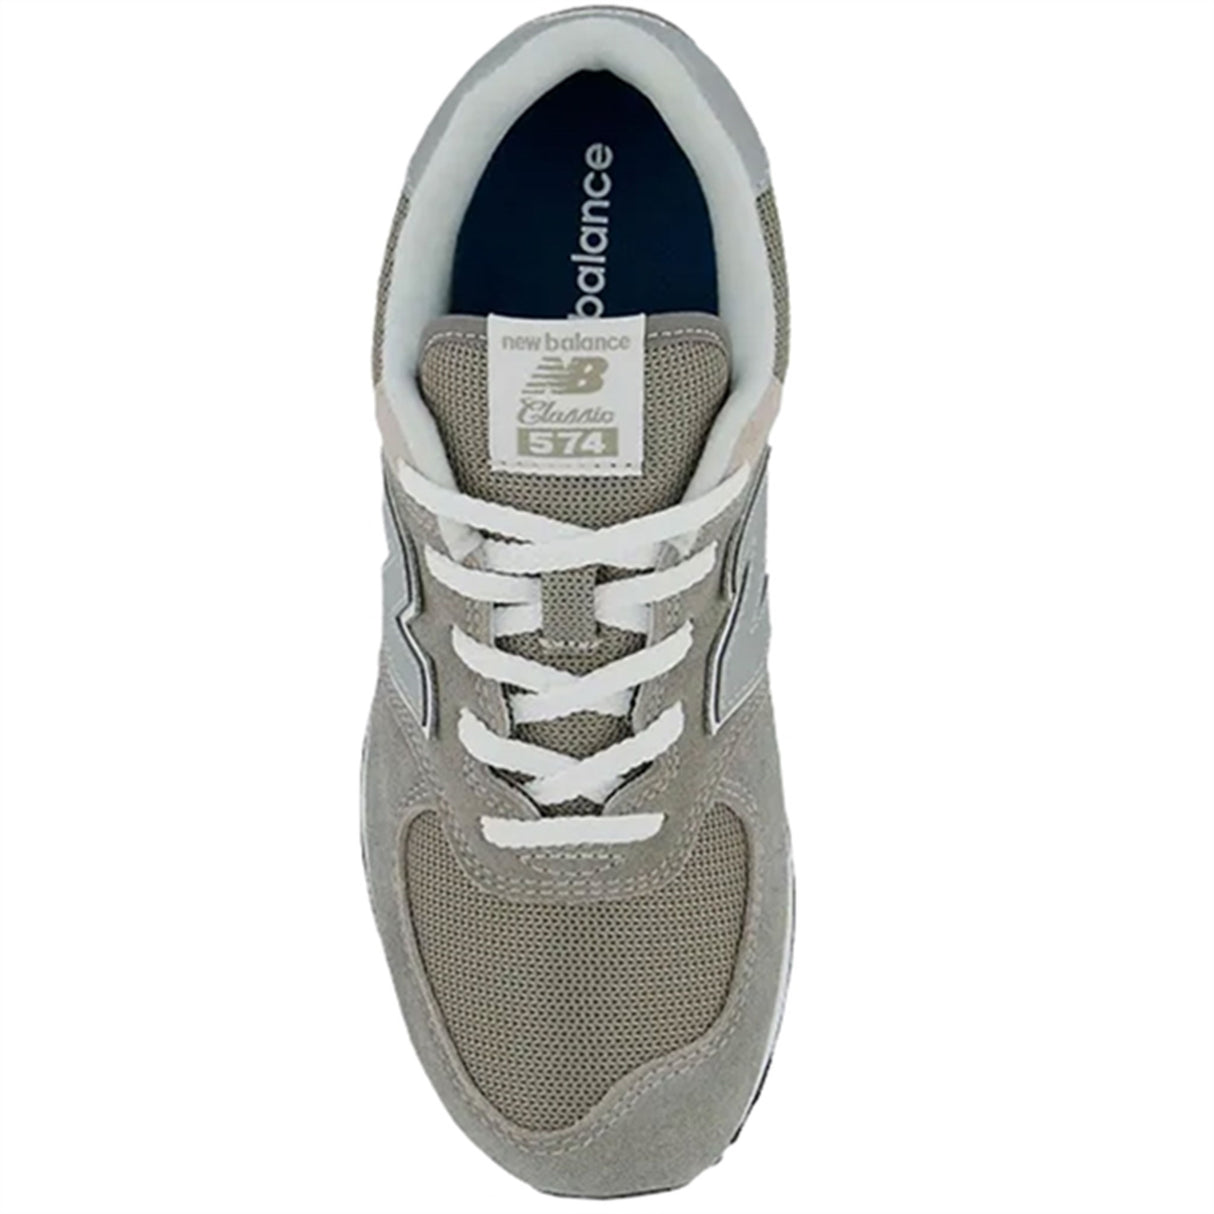 New Balance 574 Black/White Sneakers 2